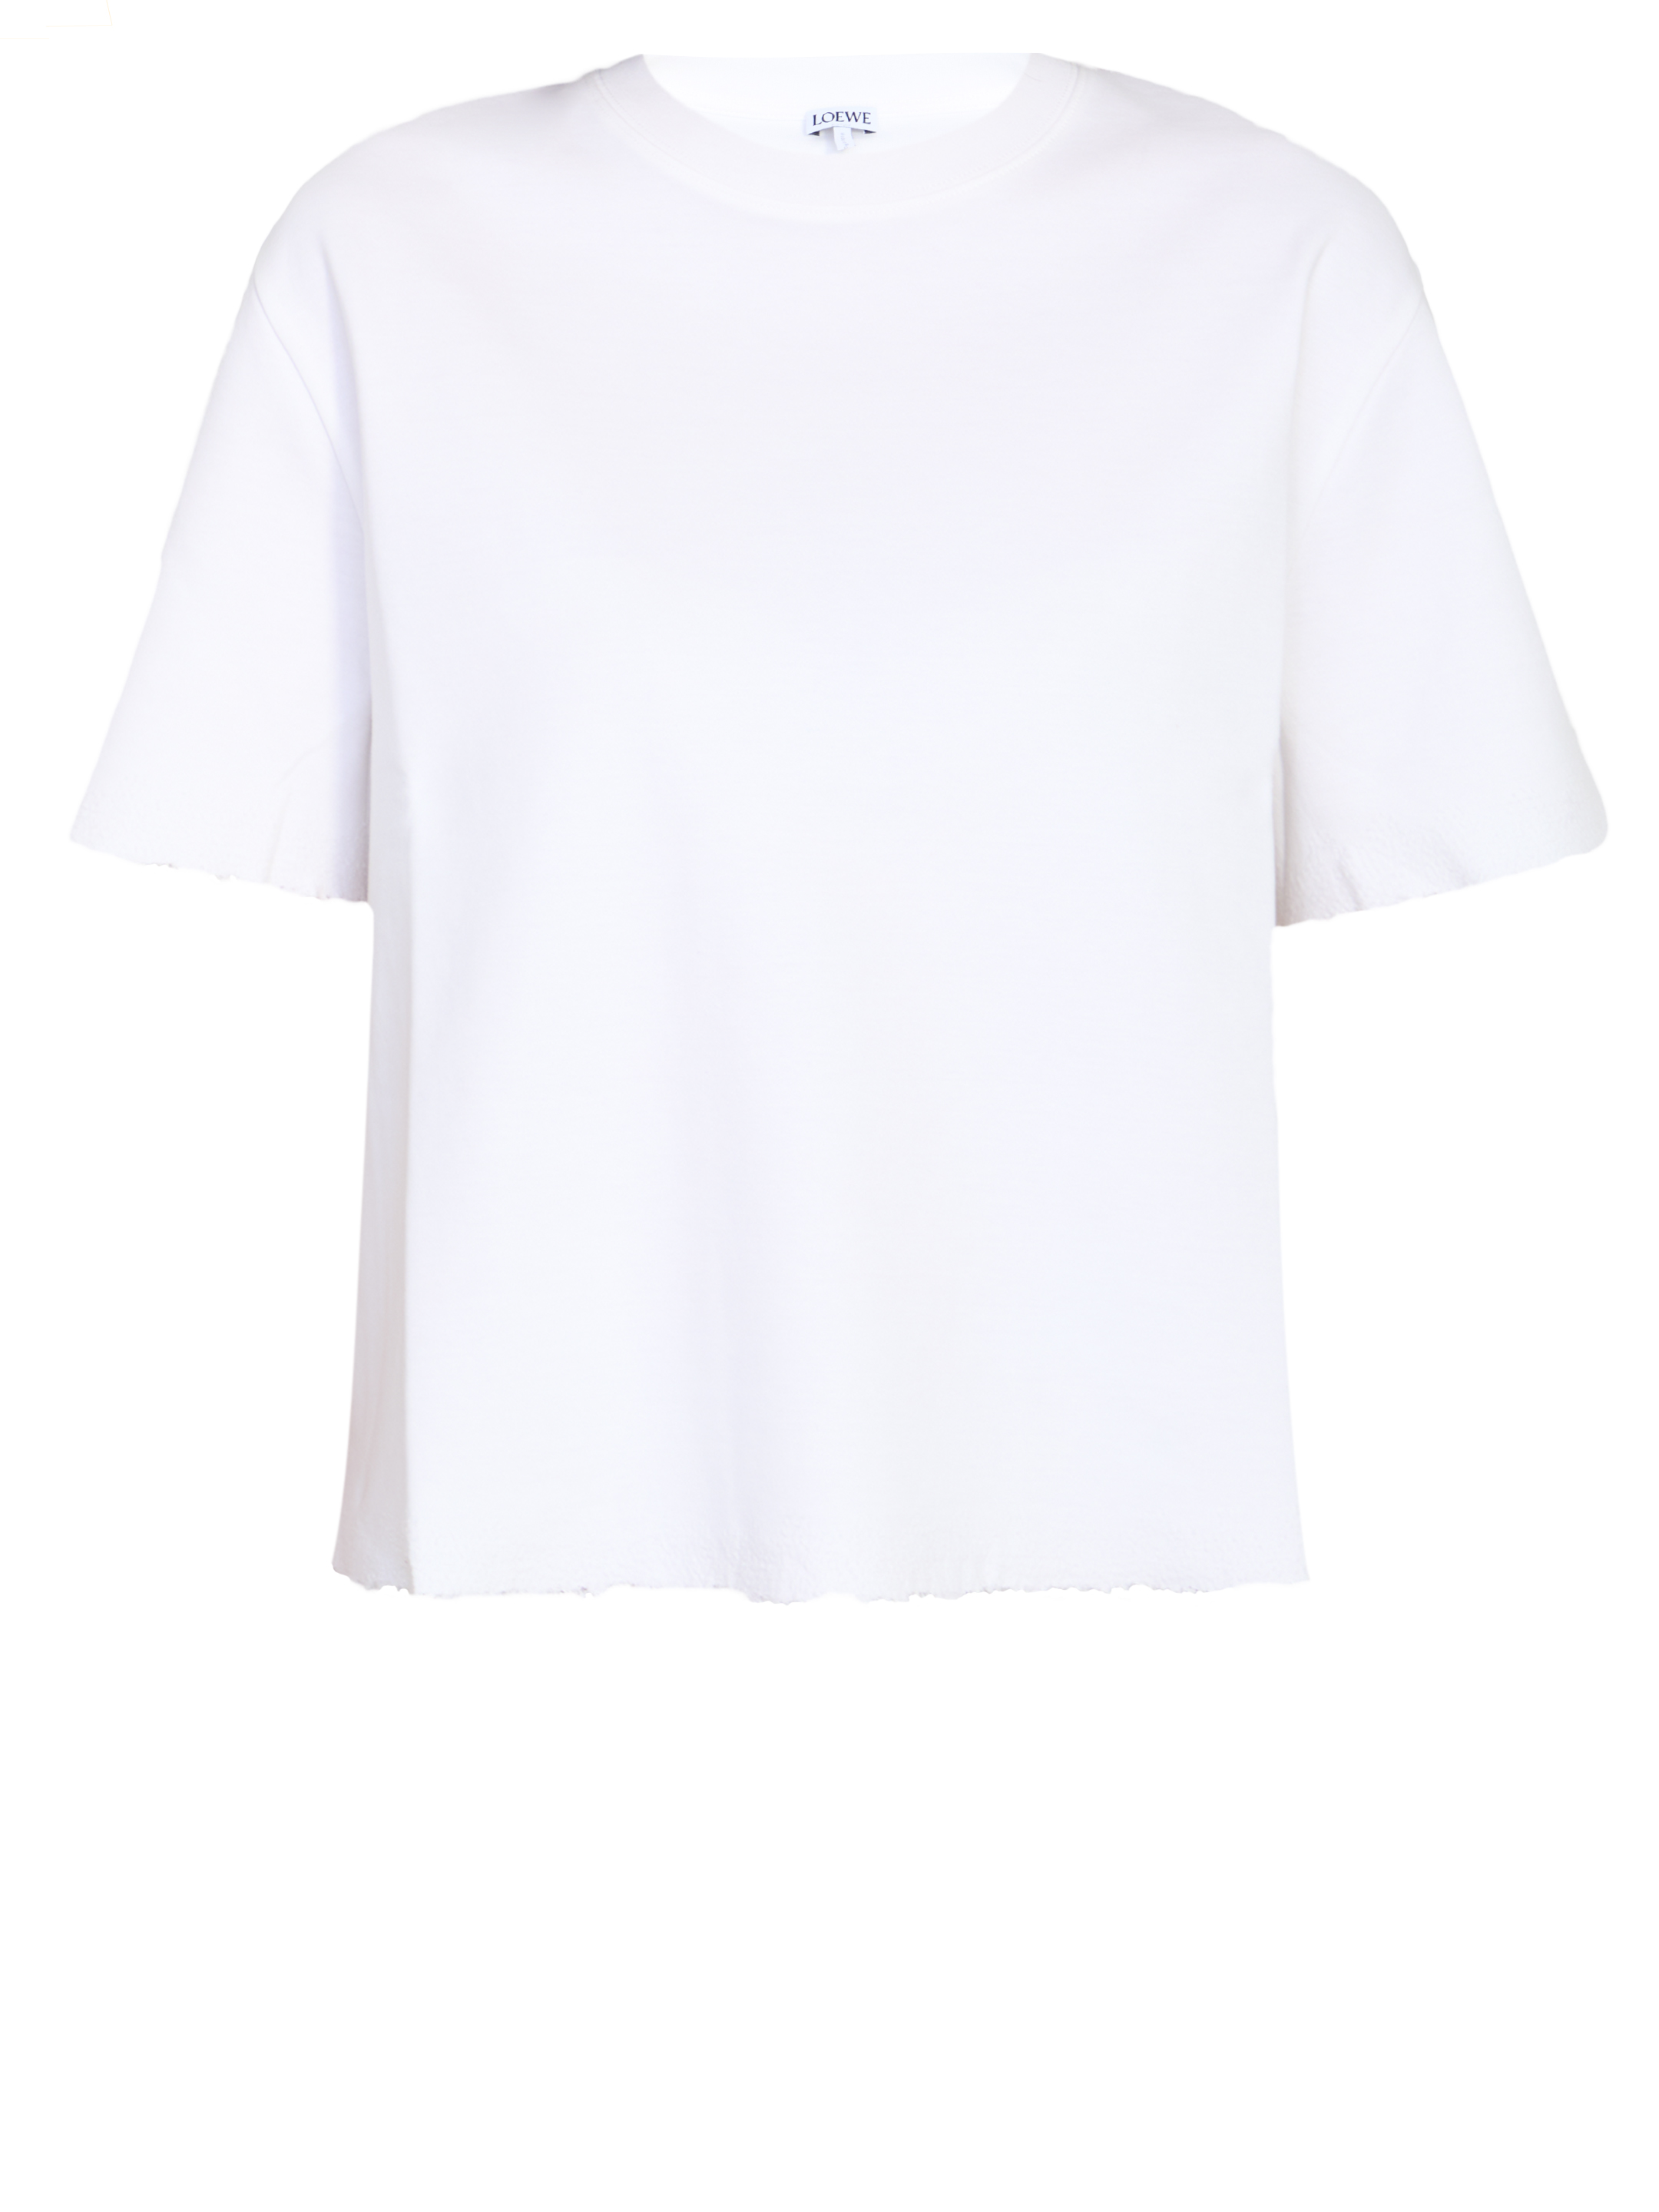 Loewe Cotton Blend Tshirt In White